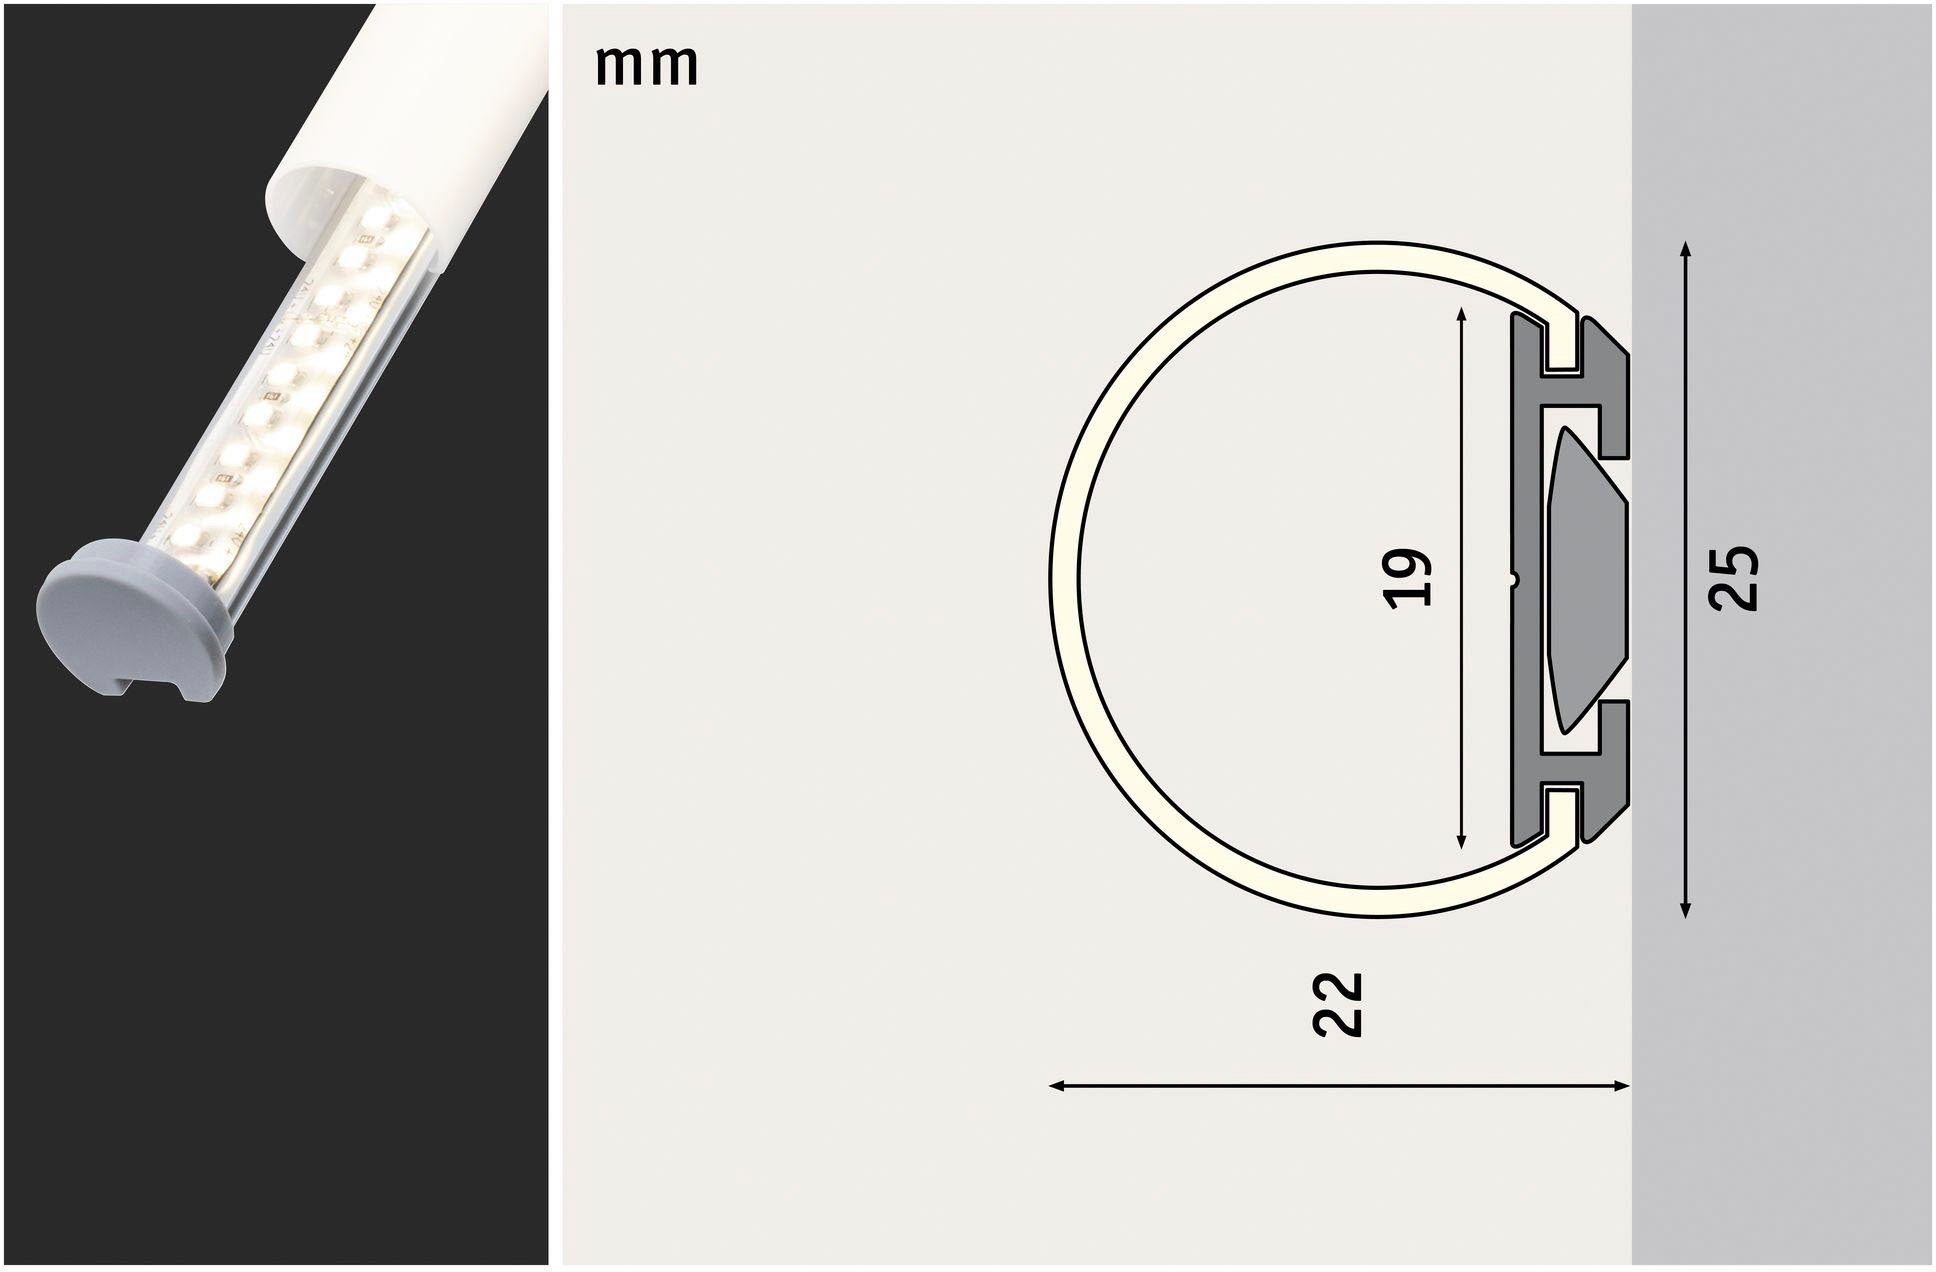 inkl. Clips, Profil Paulmann Tube Endkappen LED-Streifen Diffusor und Set 100 cm